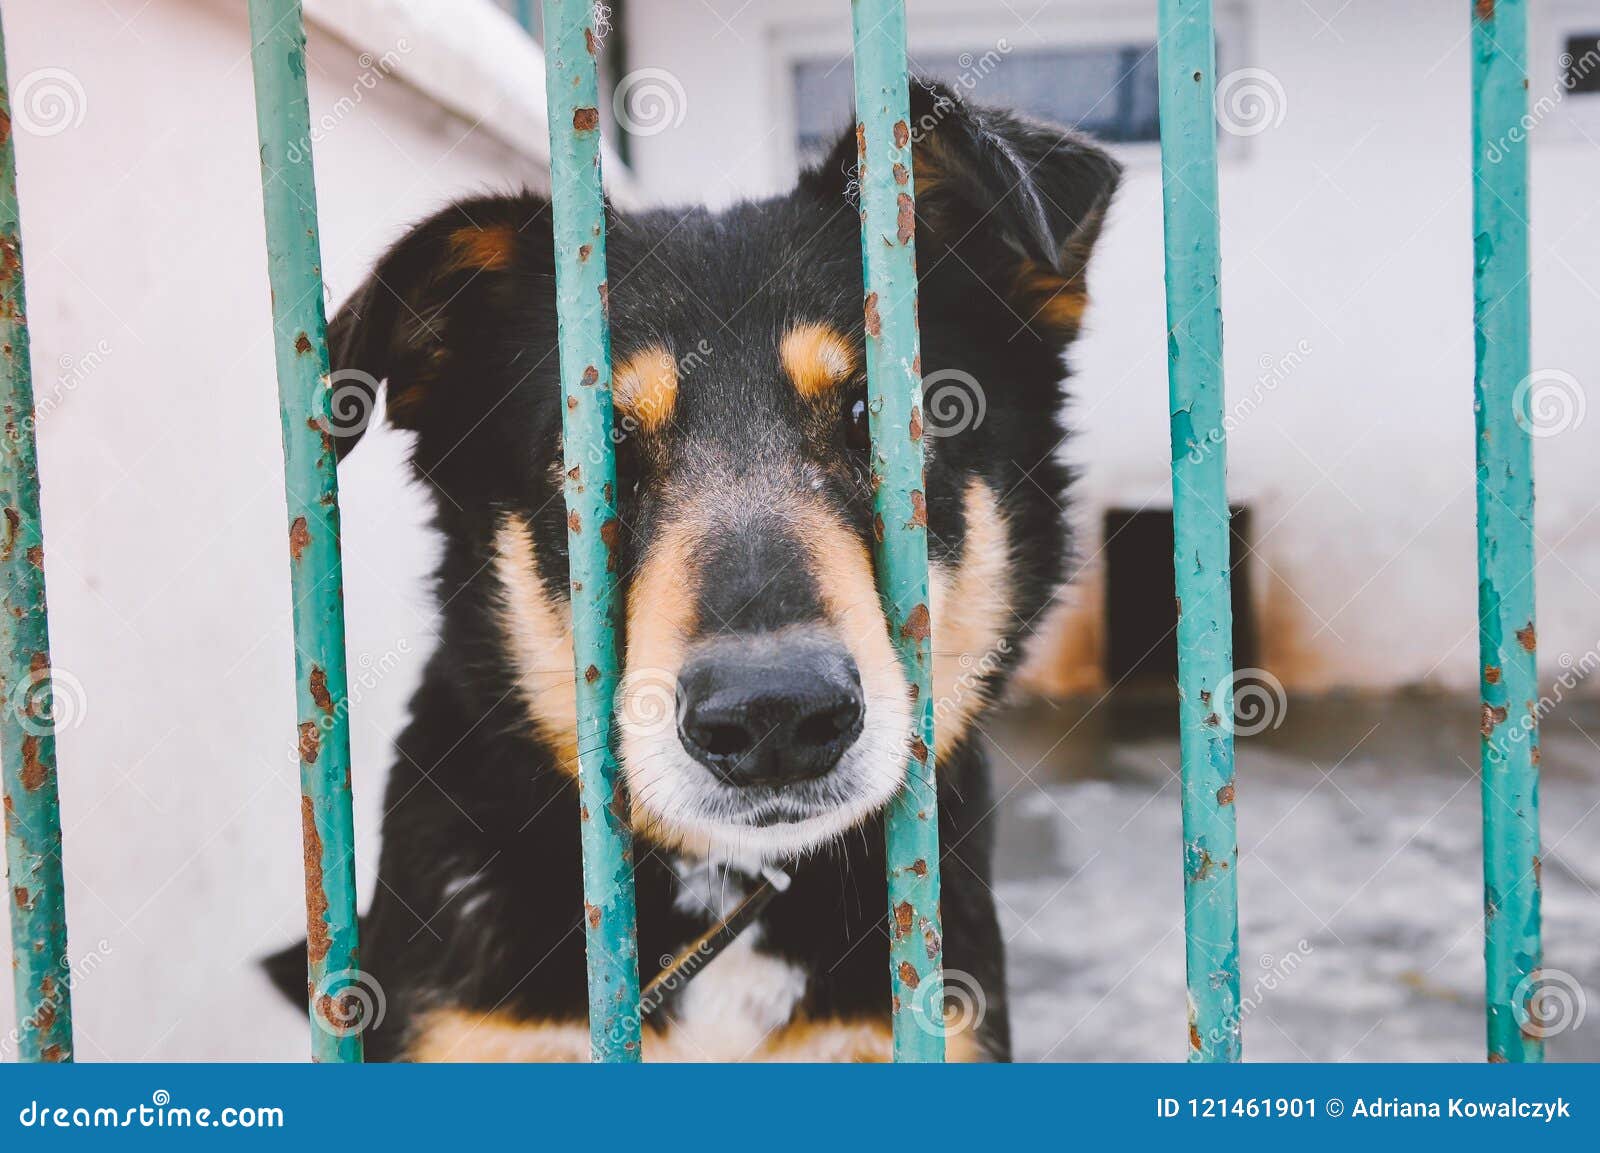 79,127 Sad Cute Animal Stock Photos - Free & Royalty-Free Stock Photos from  Dreamstime